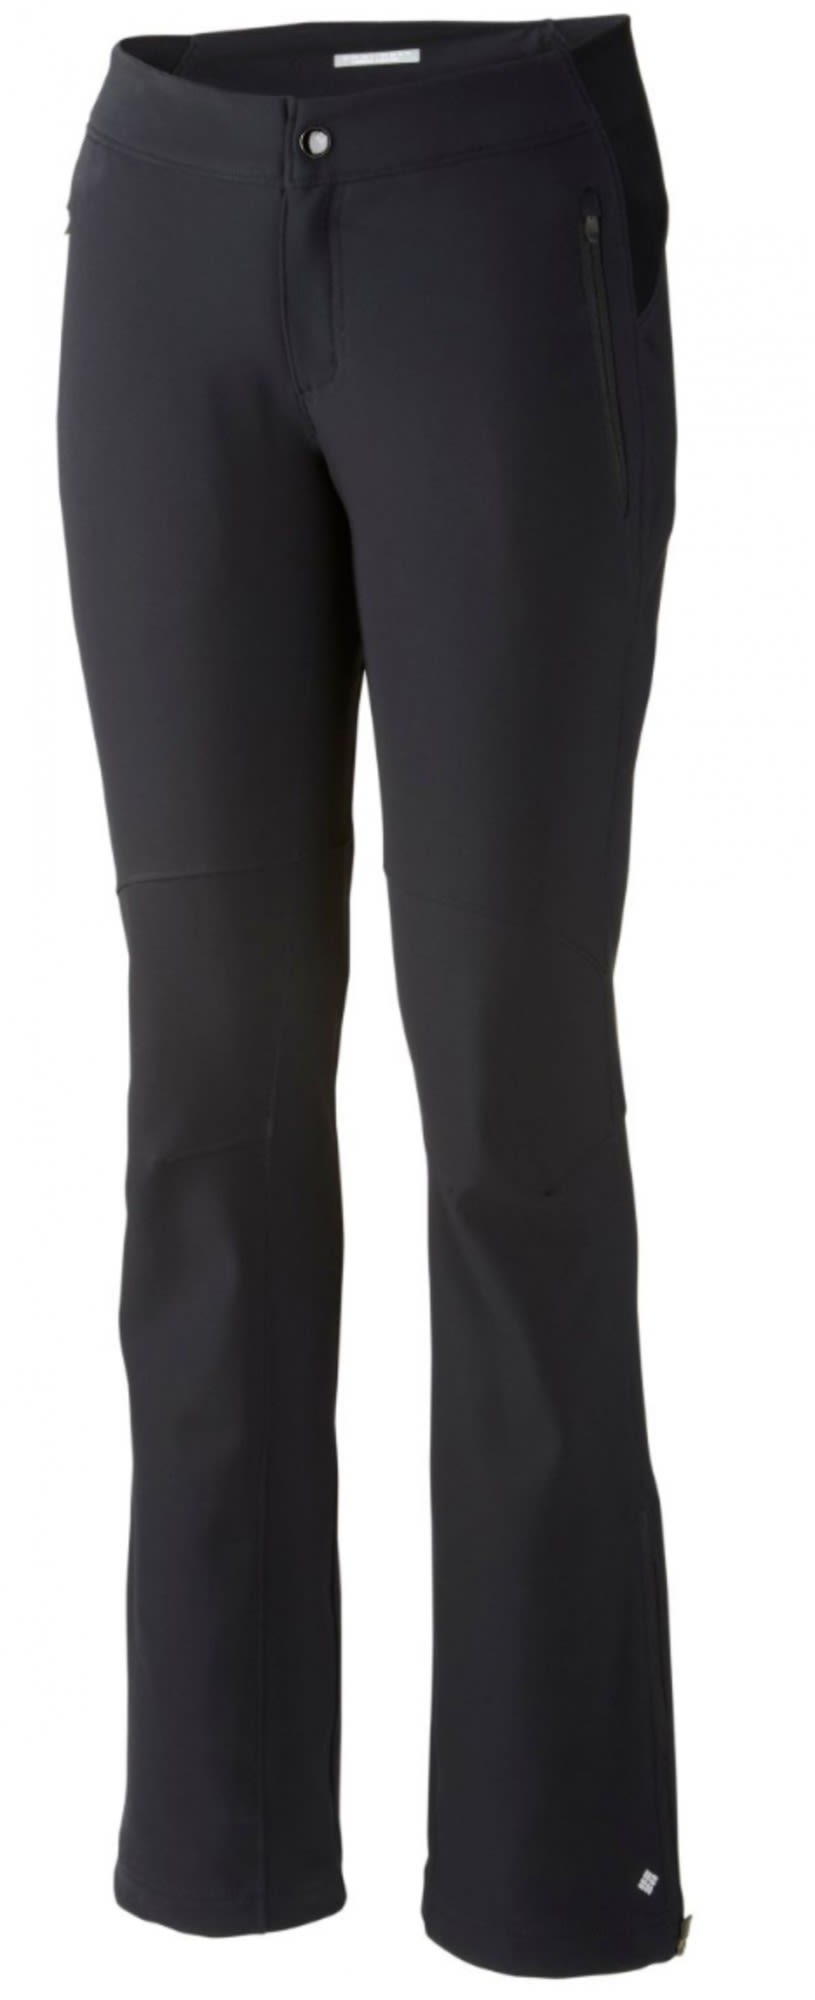 Columbia Back Beauty Passo Alto Heat Pant Schwarz- Female Softshellhosen- Grsse 14 - Short - Farbe Black